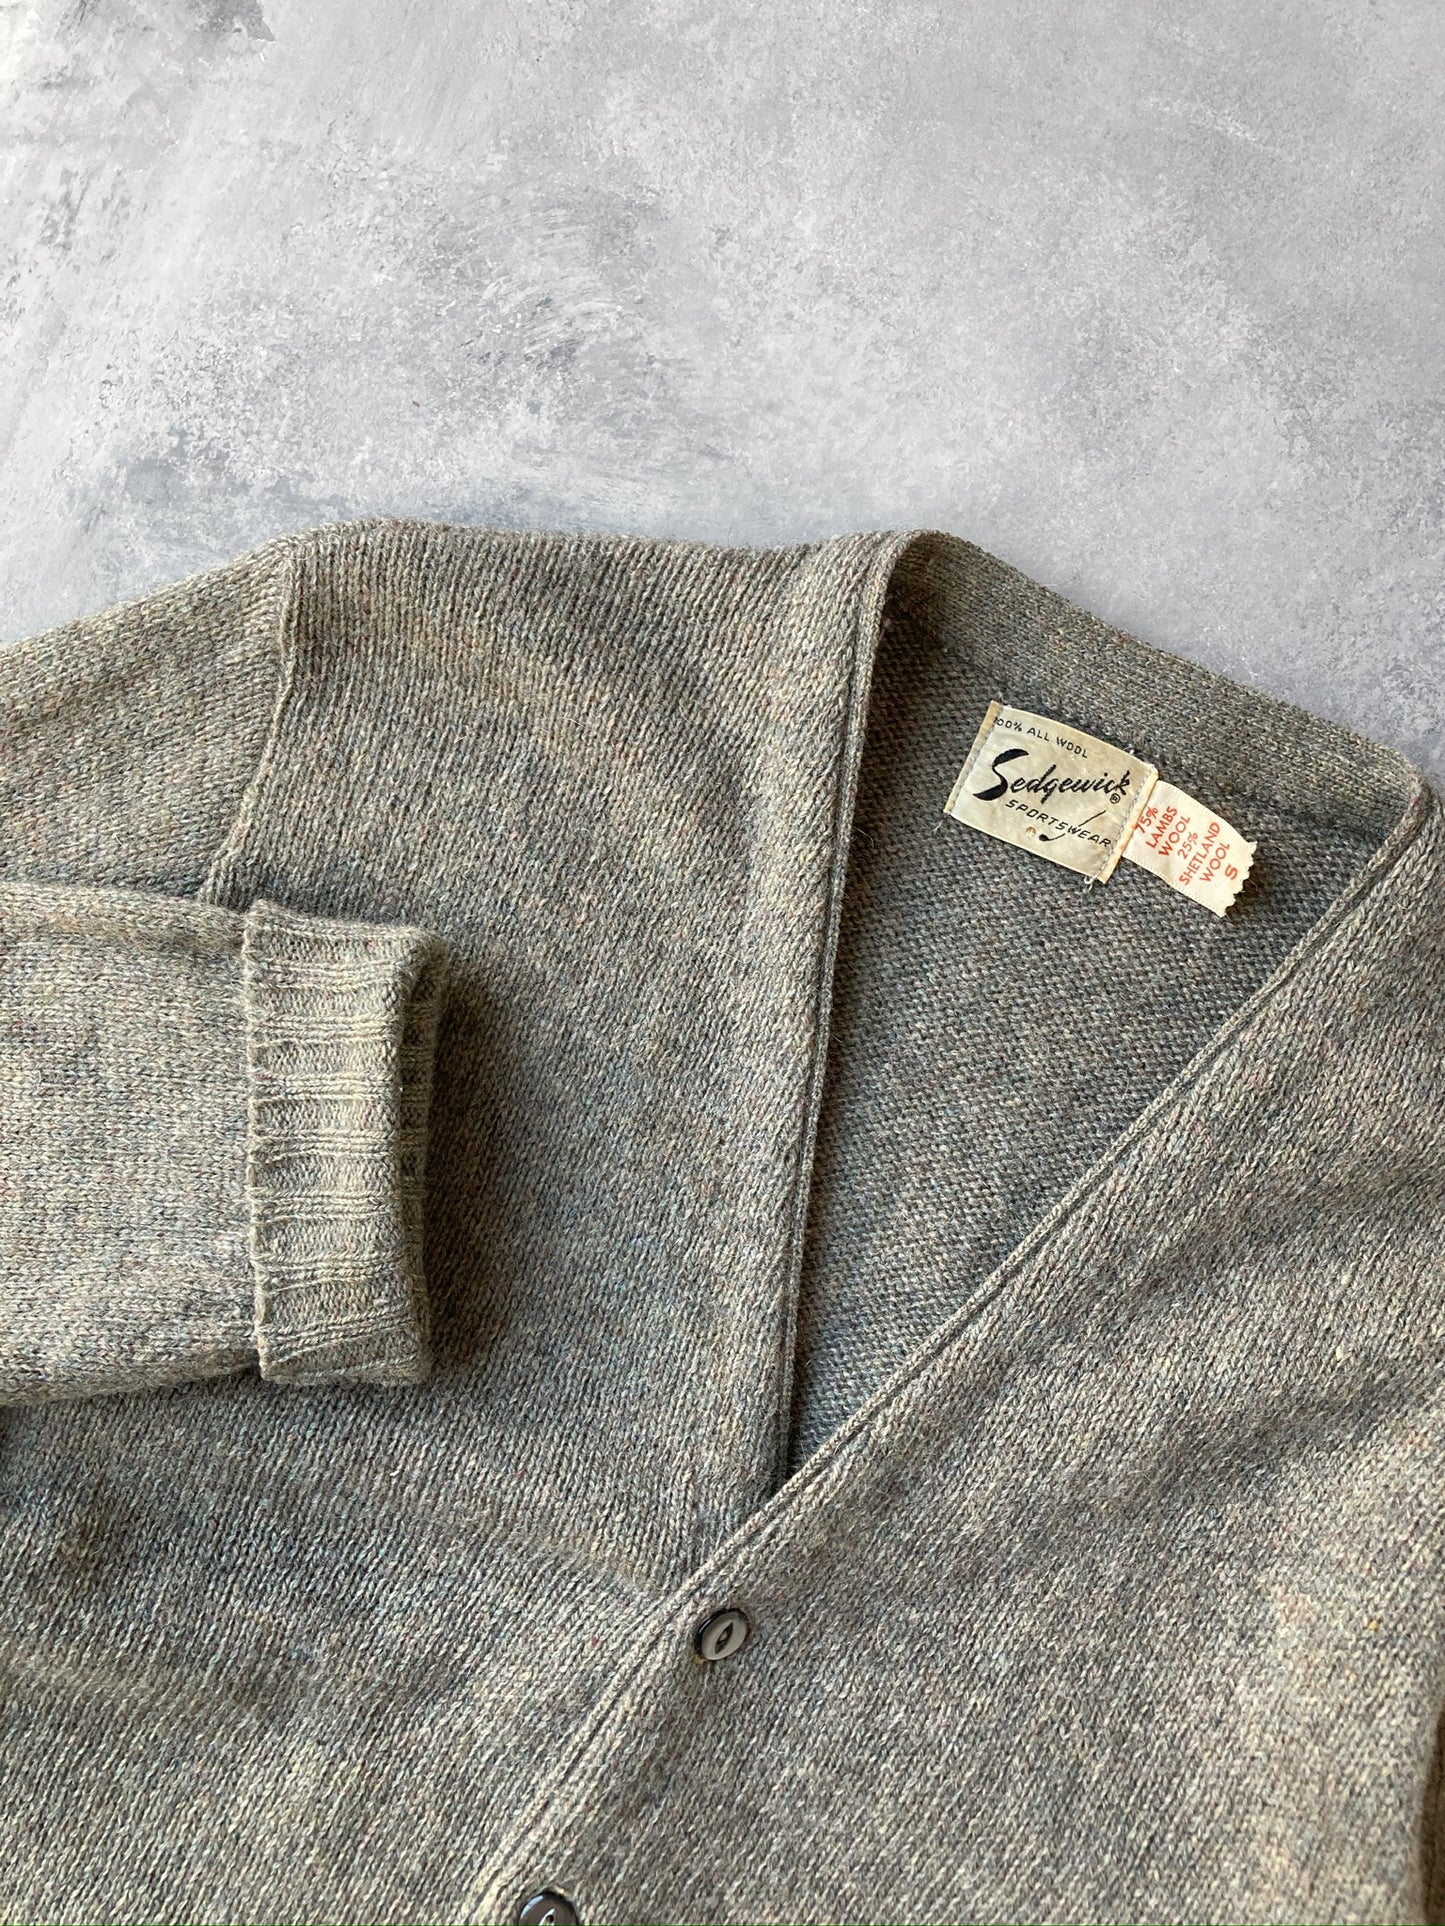 Marled Wool Cardigan Sweater 70's - Small